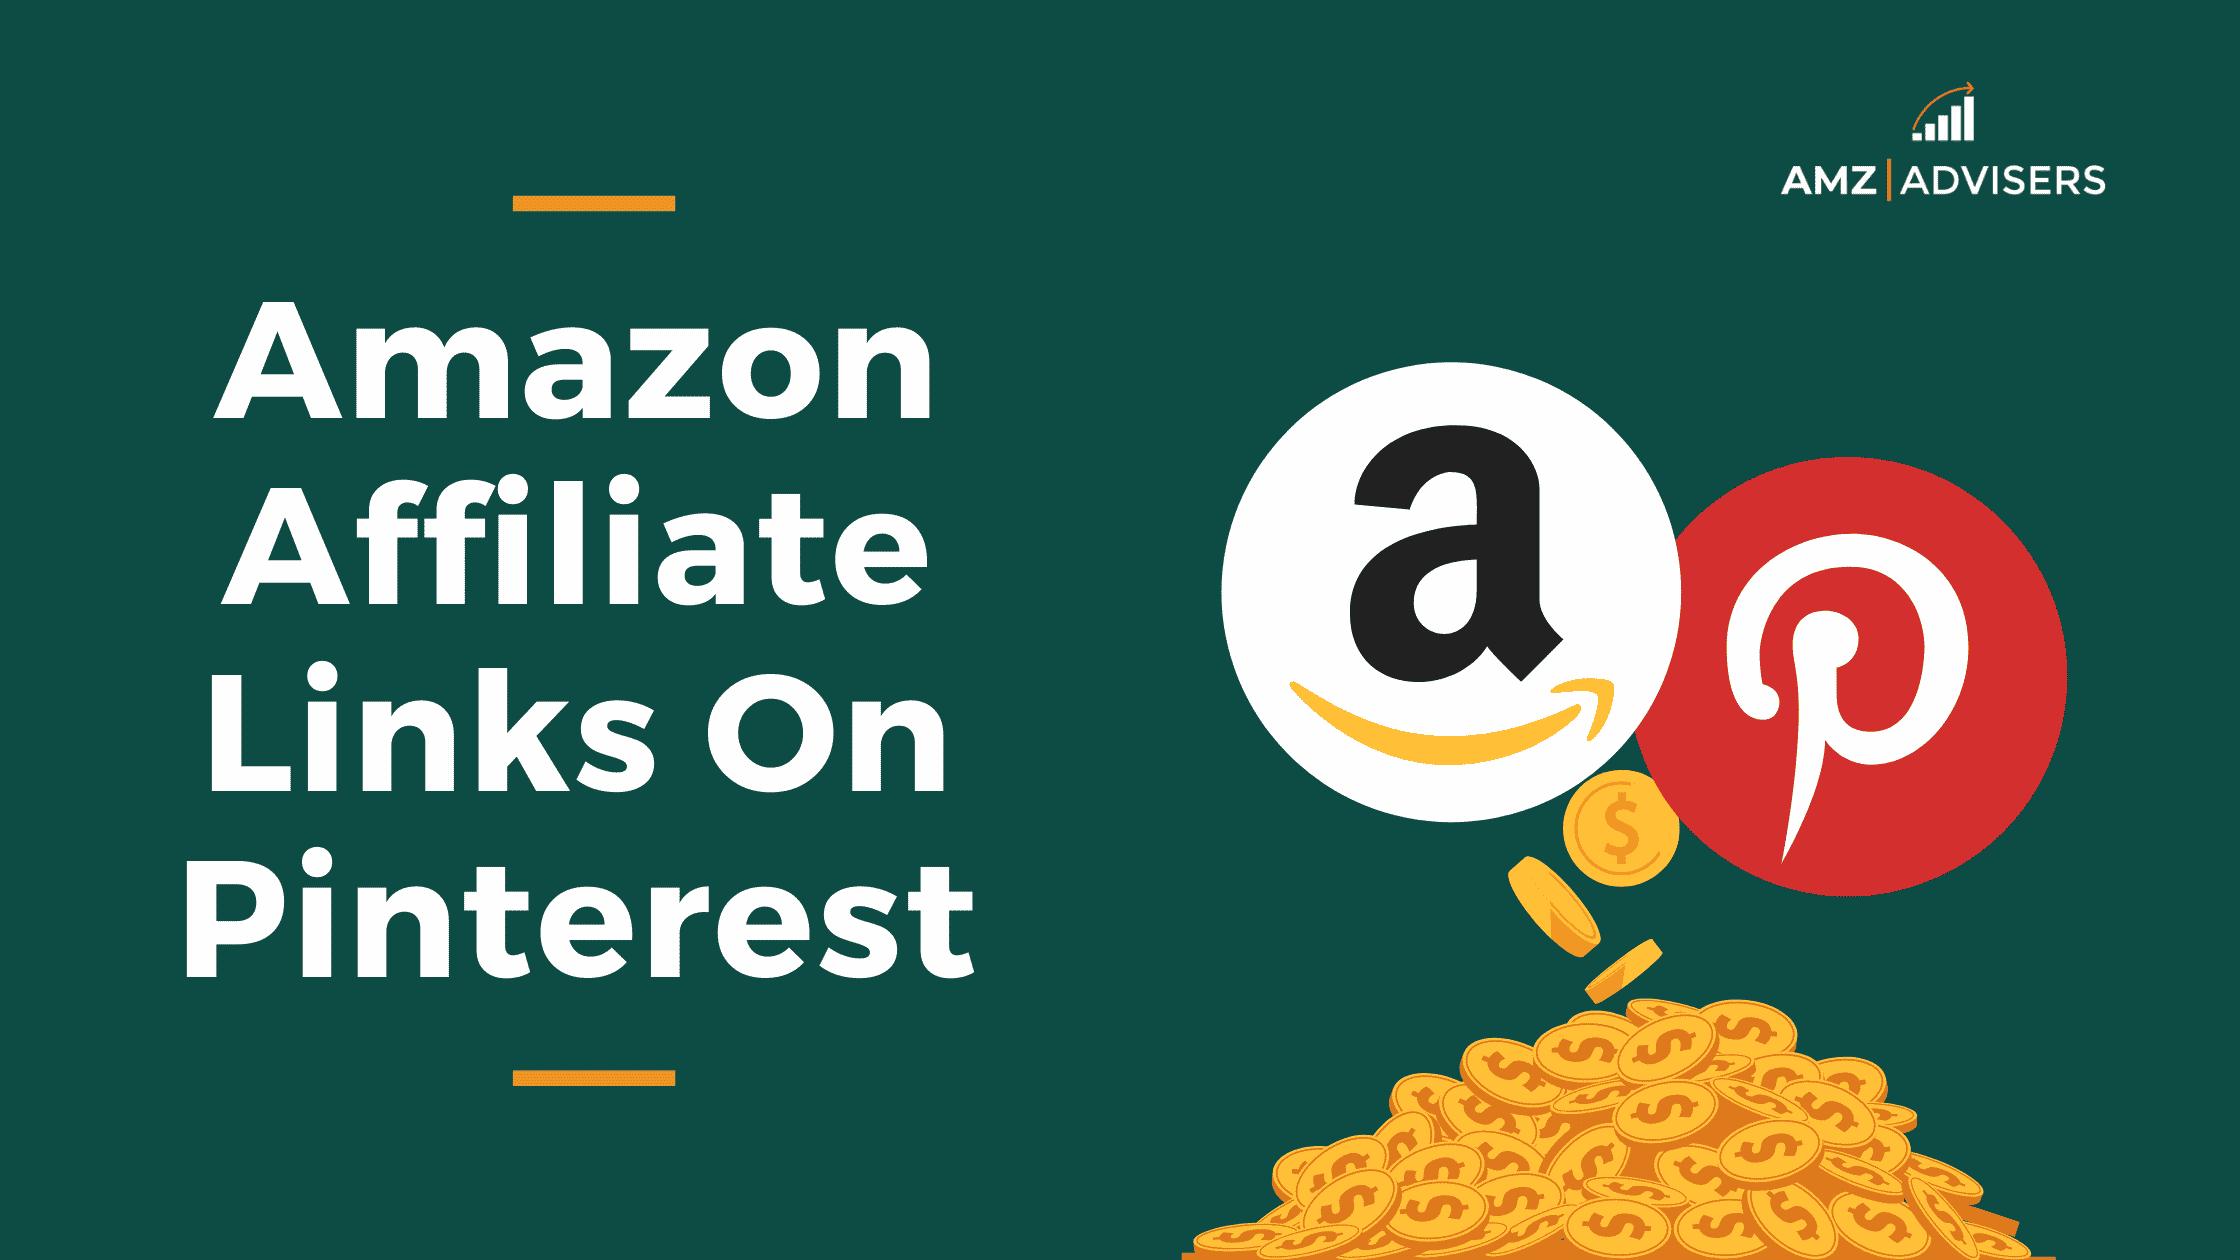 Amazon Affiliate Links on Pinterest: How Do They Work? - AMZ Advisers